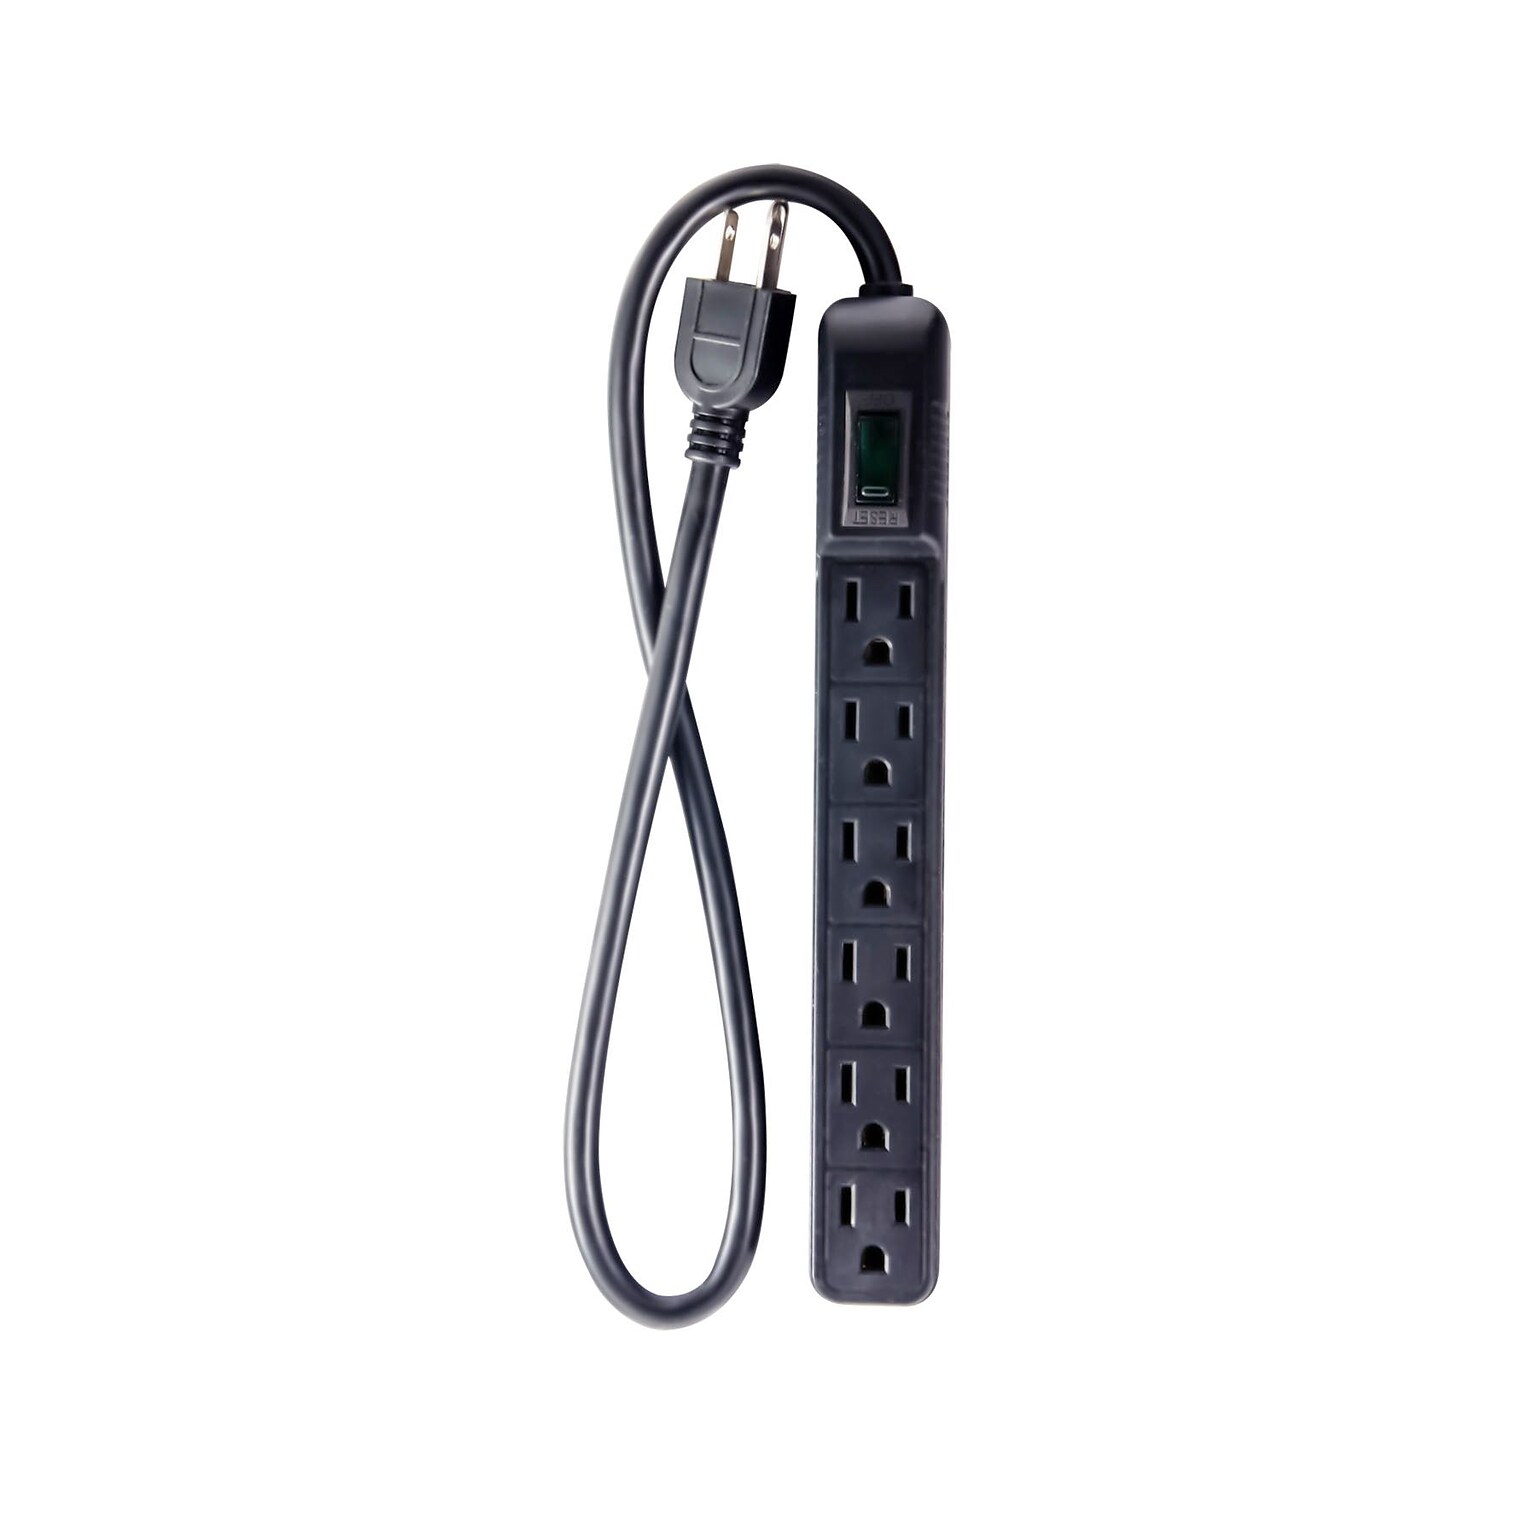 GoGreen Power 6 Outlet Mini Surge Protector, 2 cord, Black (GG-16103MINBK)